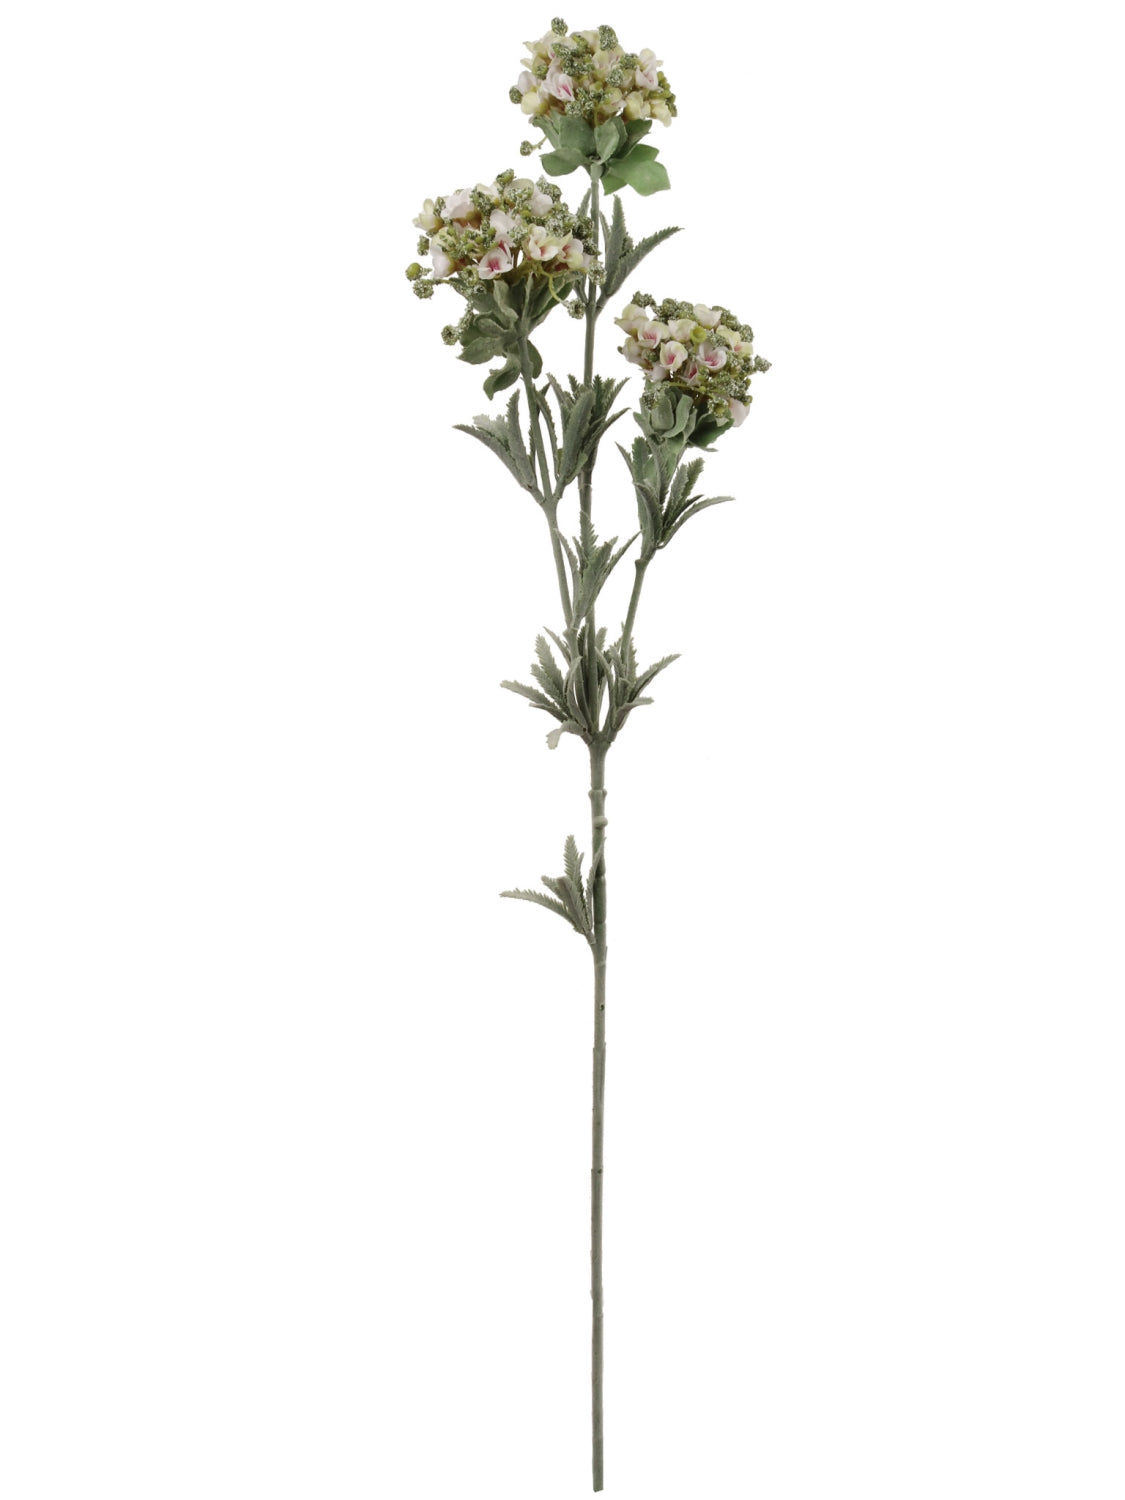 Enchanting 32" Sweet Alyssum - White | Delicate Blooms, Fragrant Flowers, Low Maintenance | Premium Seeds for Vibrant Landscapes